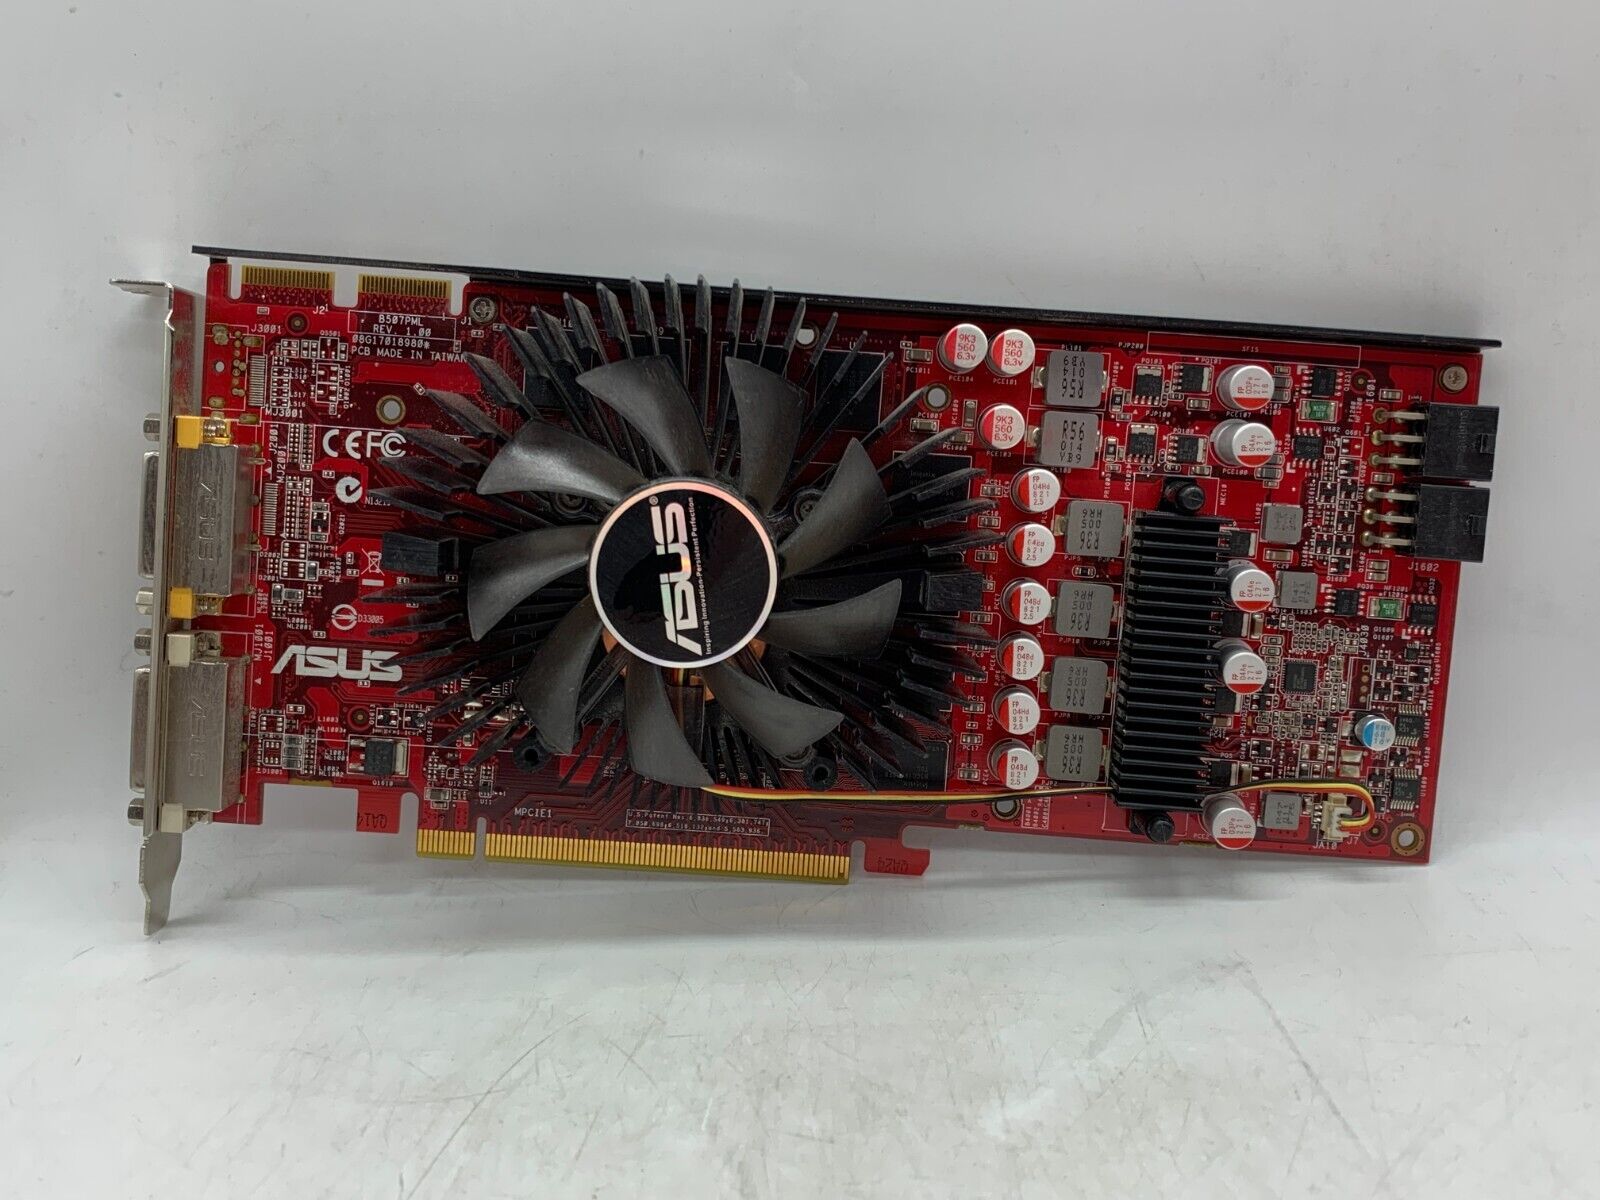 ASUS ATI Radeon HD 4870 Video Card 1GB GDDR5 PCIe EAH4870/2DI/1GD5